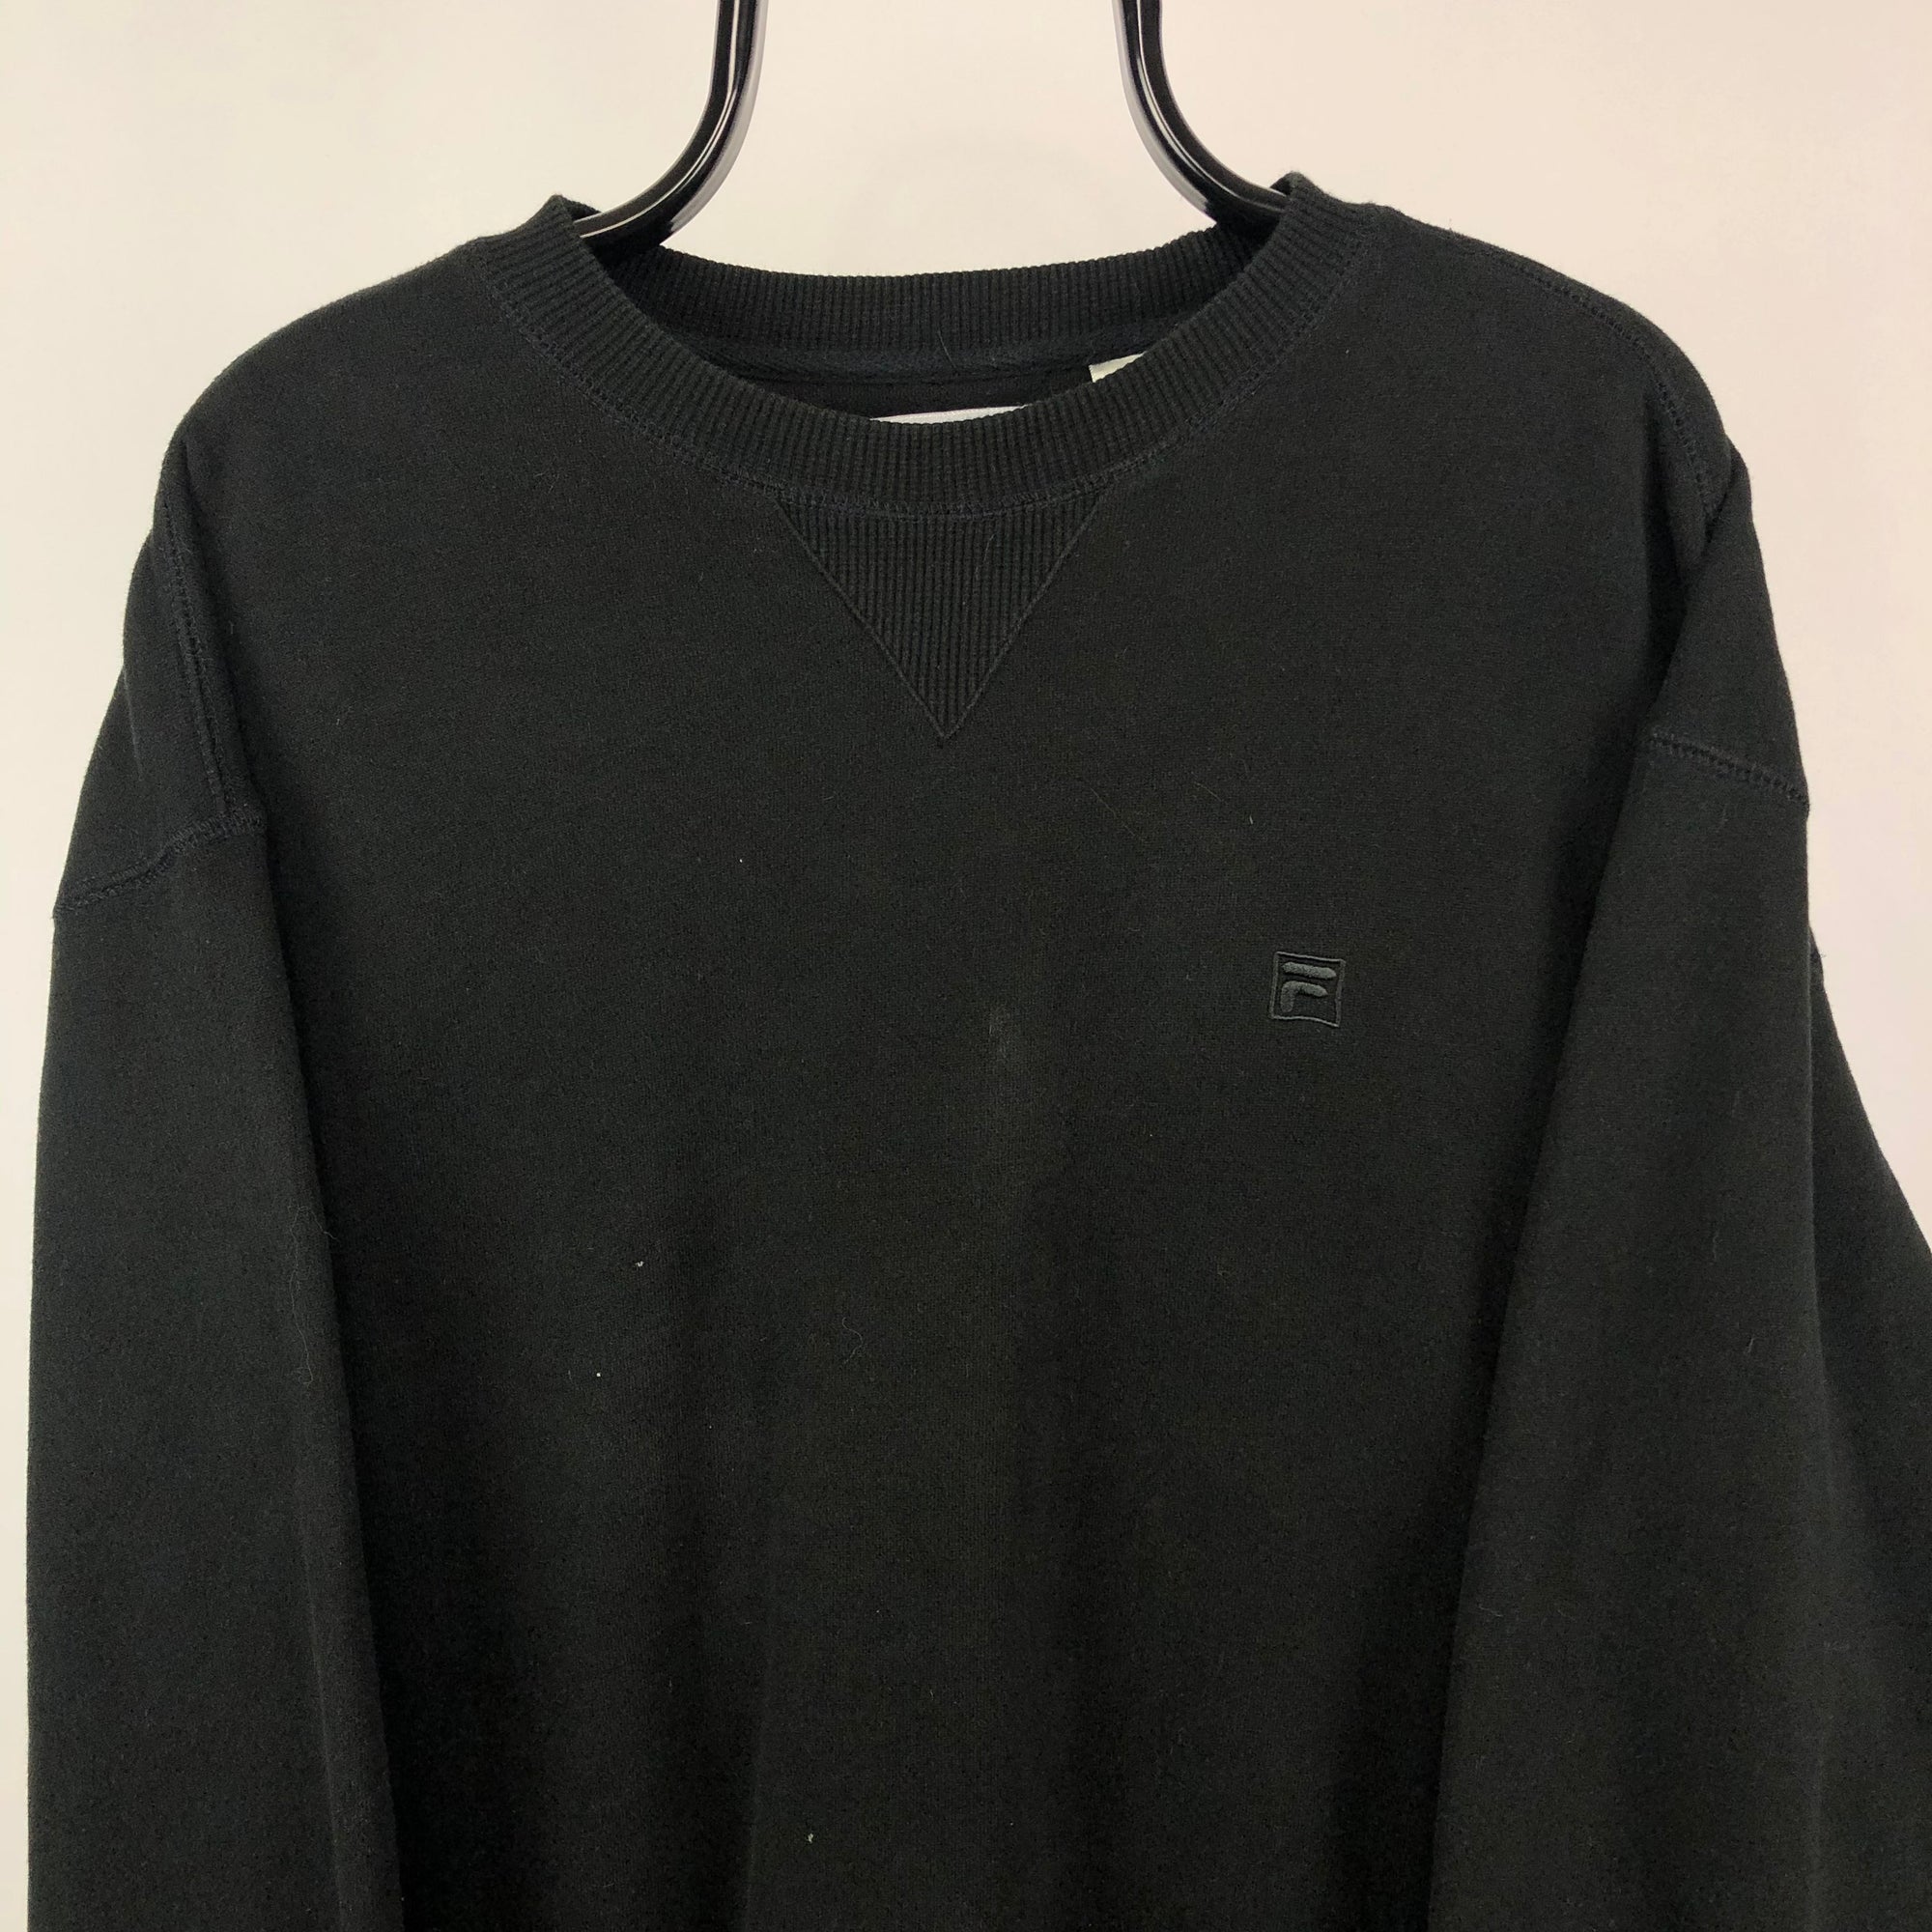 Vintage Fila Embroidered Small Logo Sweatshirt in Black - Men's XL/Women's XXL